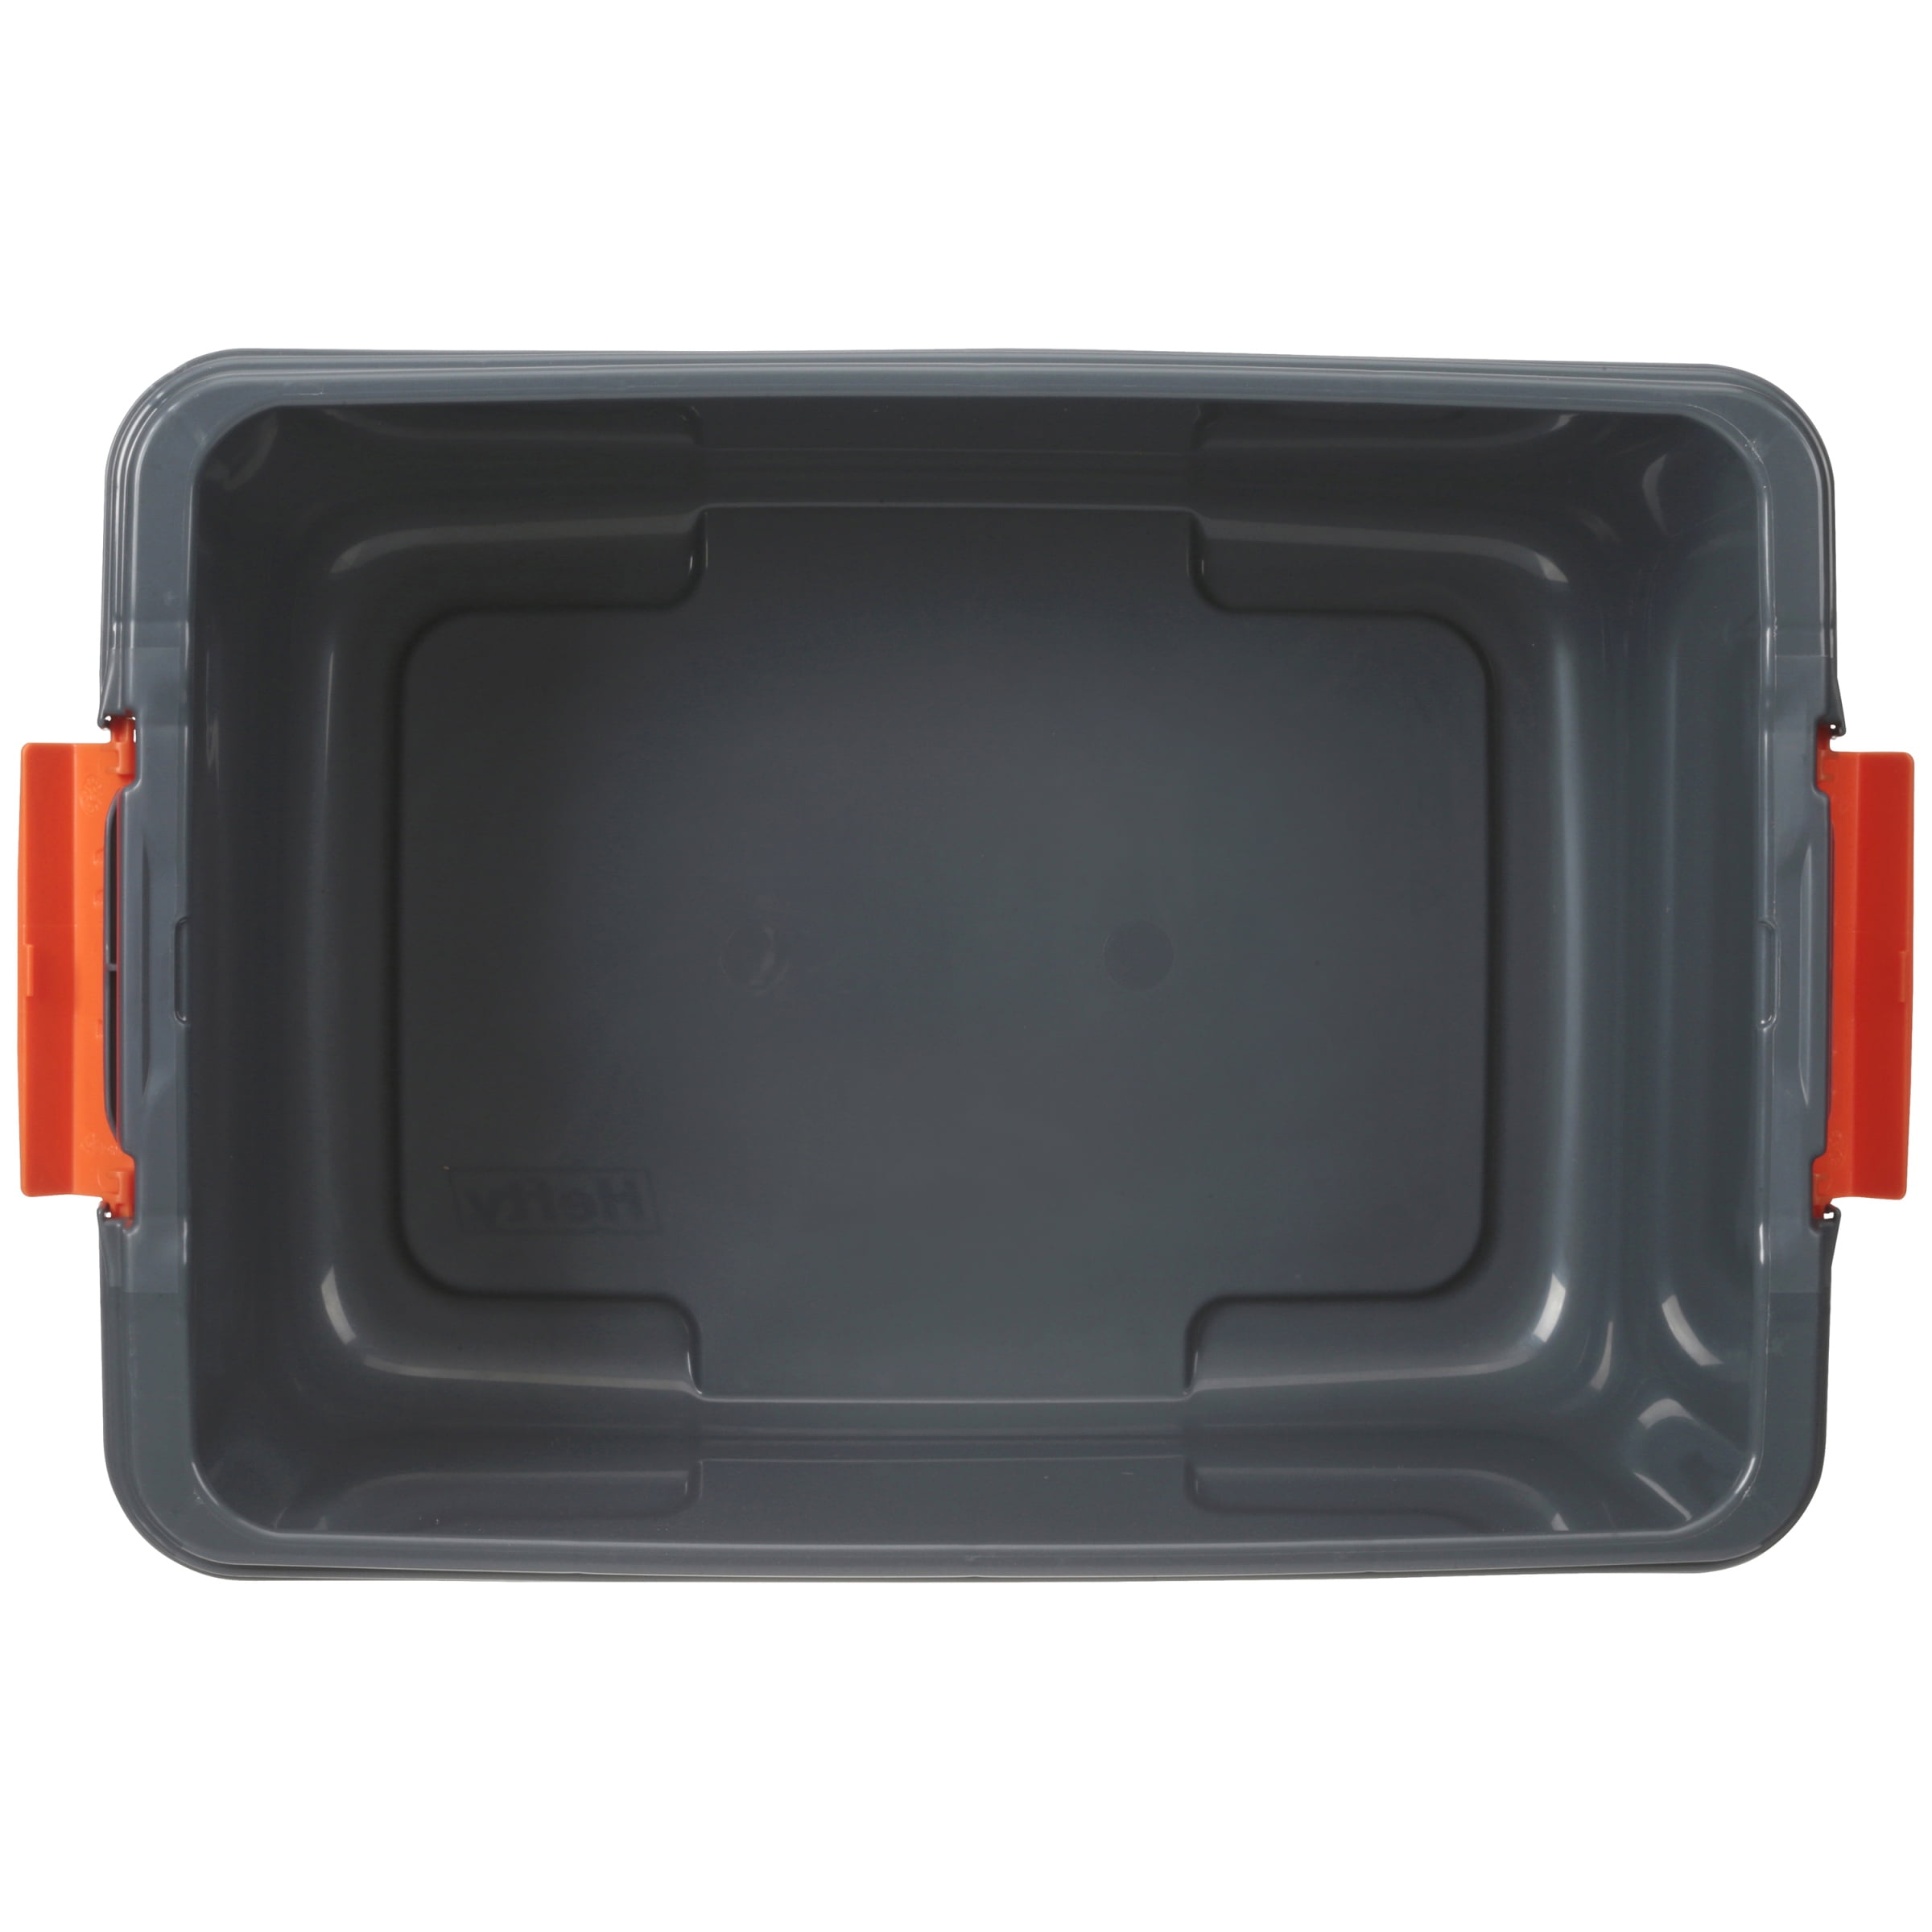 Hefty HI-RISE PRO Heavy Duty Storage Bins, 72 Qt. Latch Storage Box,  Orange/Gray